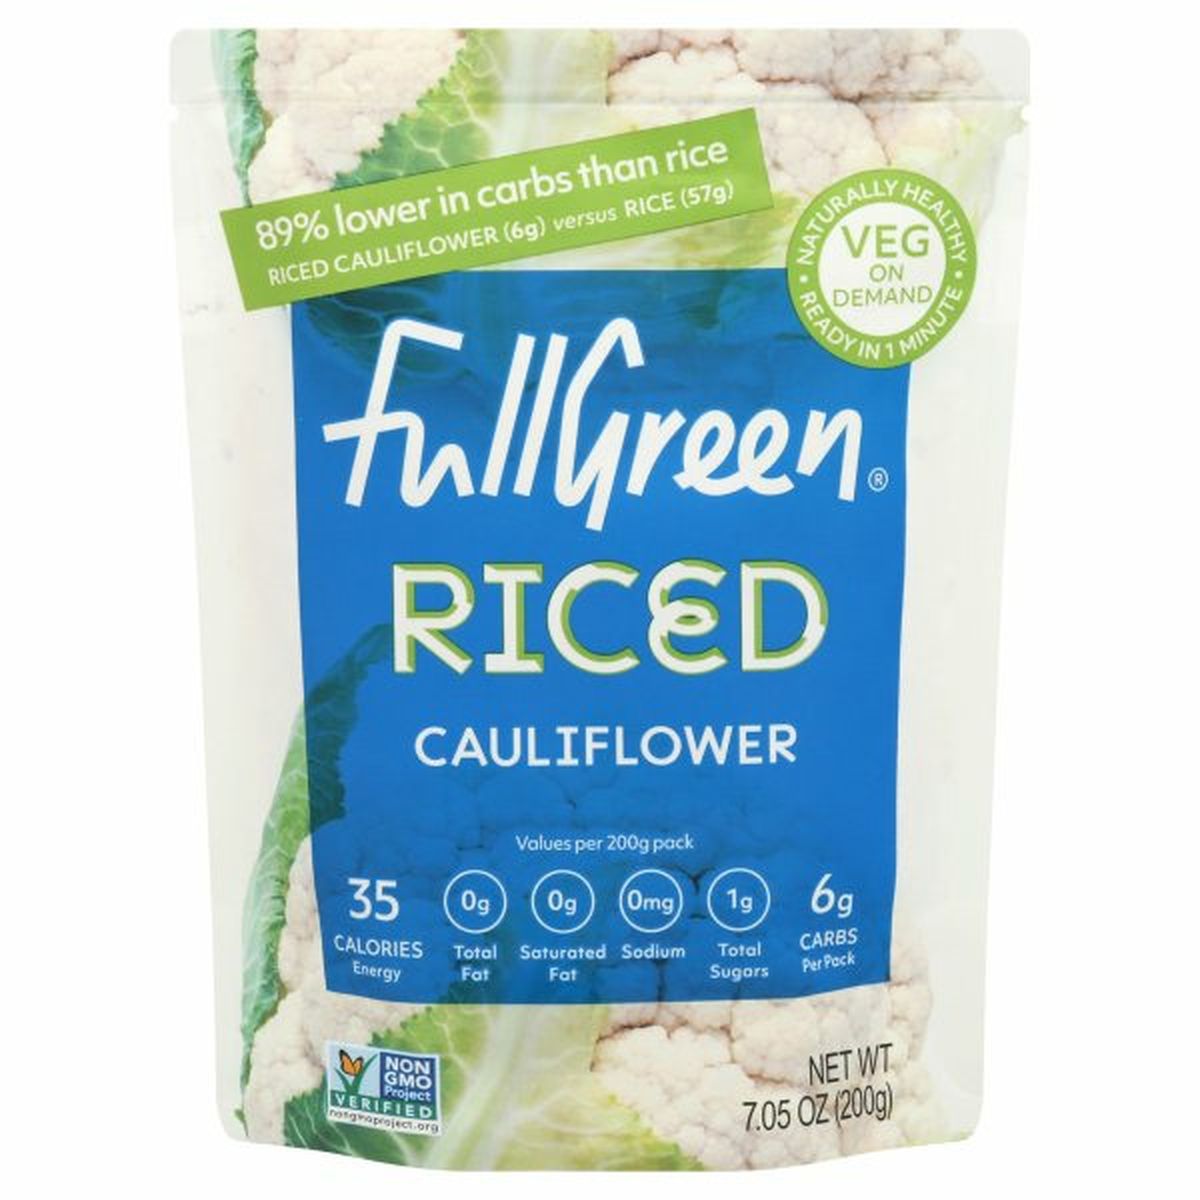 Calories in Fullgreen Cauliflower, Riced